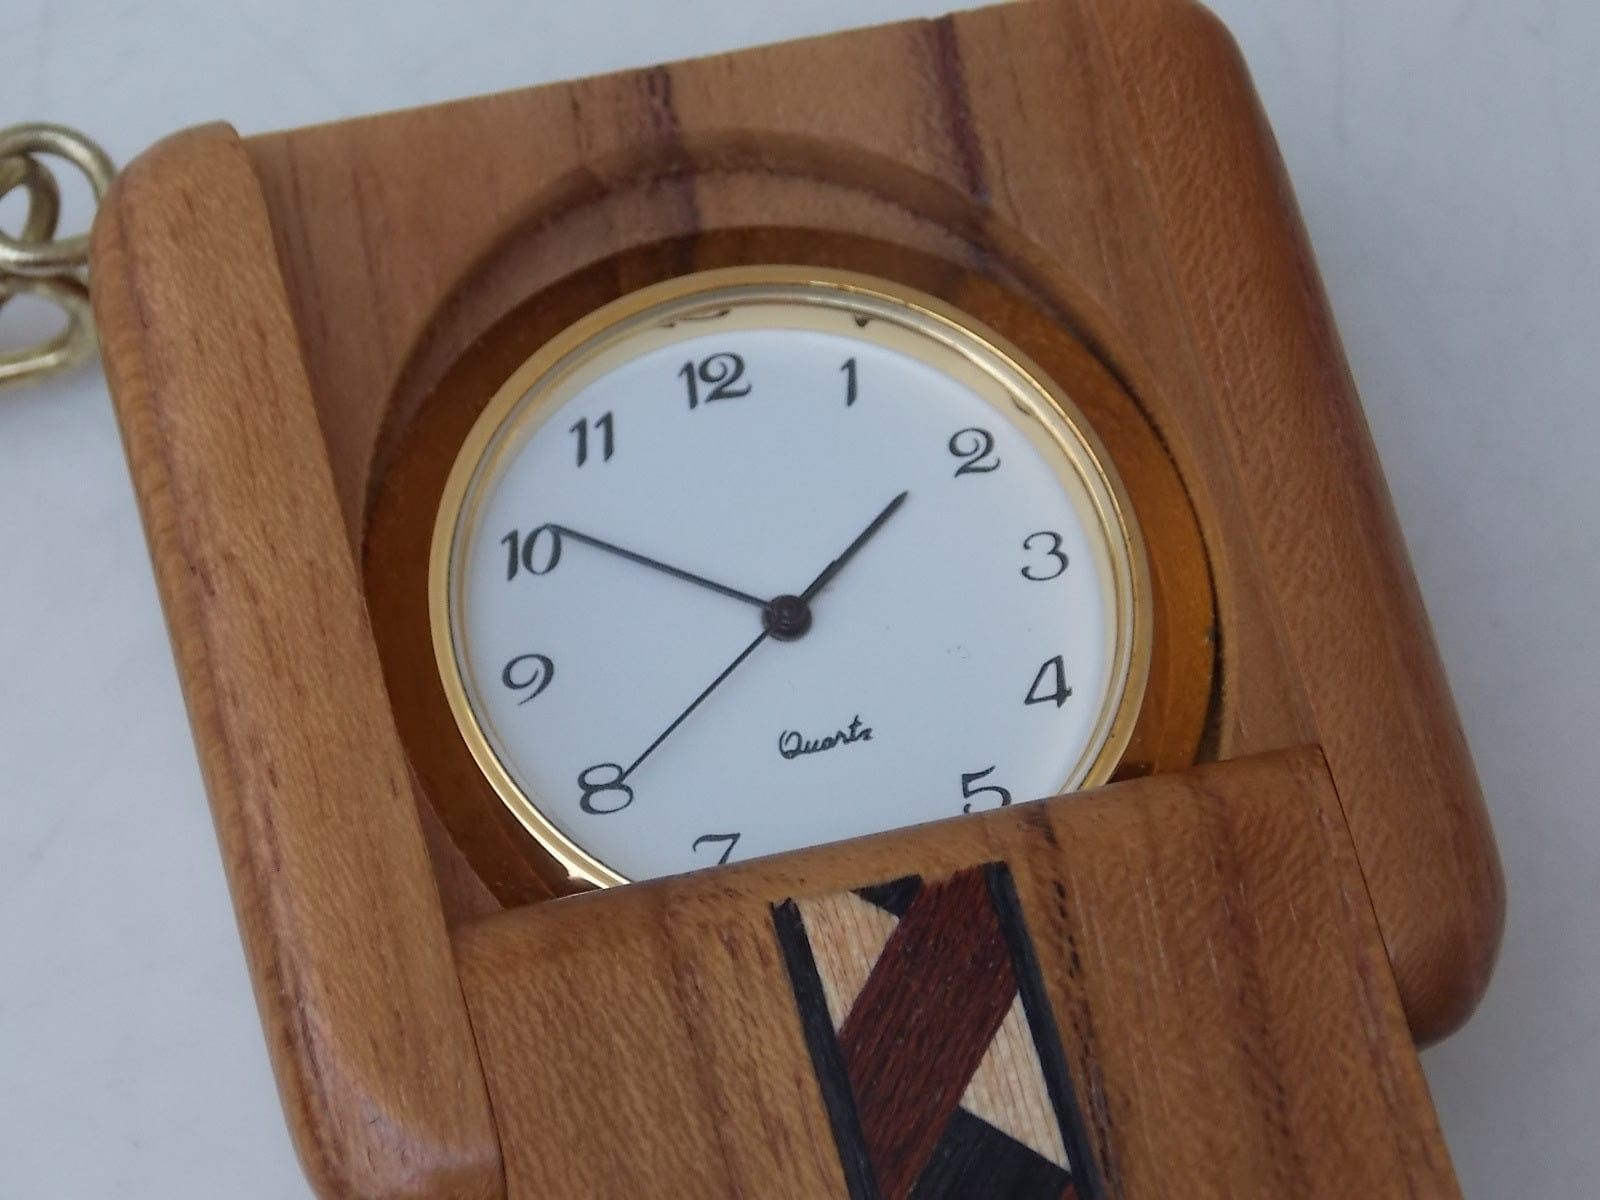 I Like Mike's Mid Century Modern Clock Wooden Artisan Key Chain Clock, Quartz, Small Heart